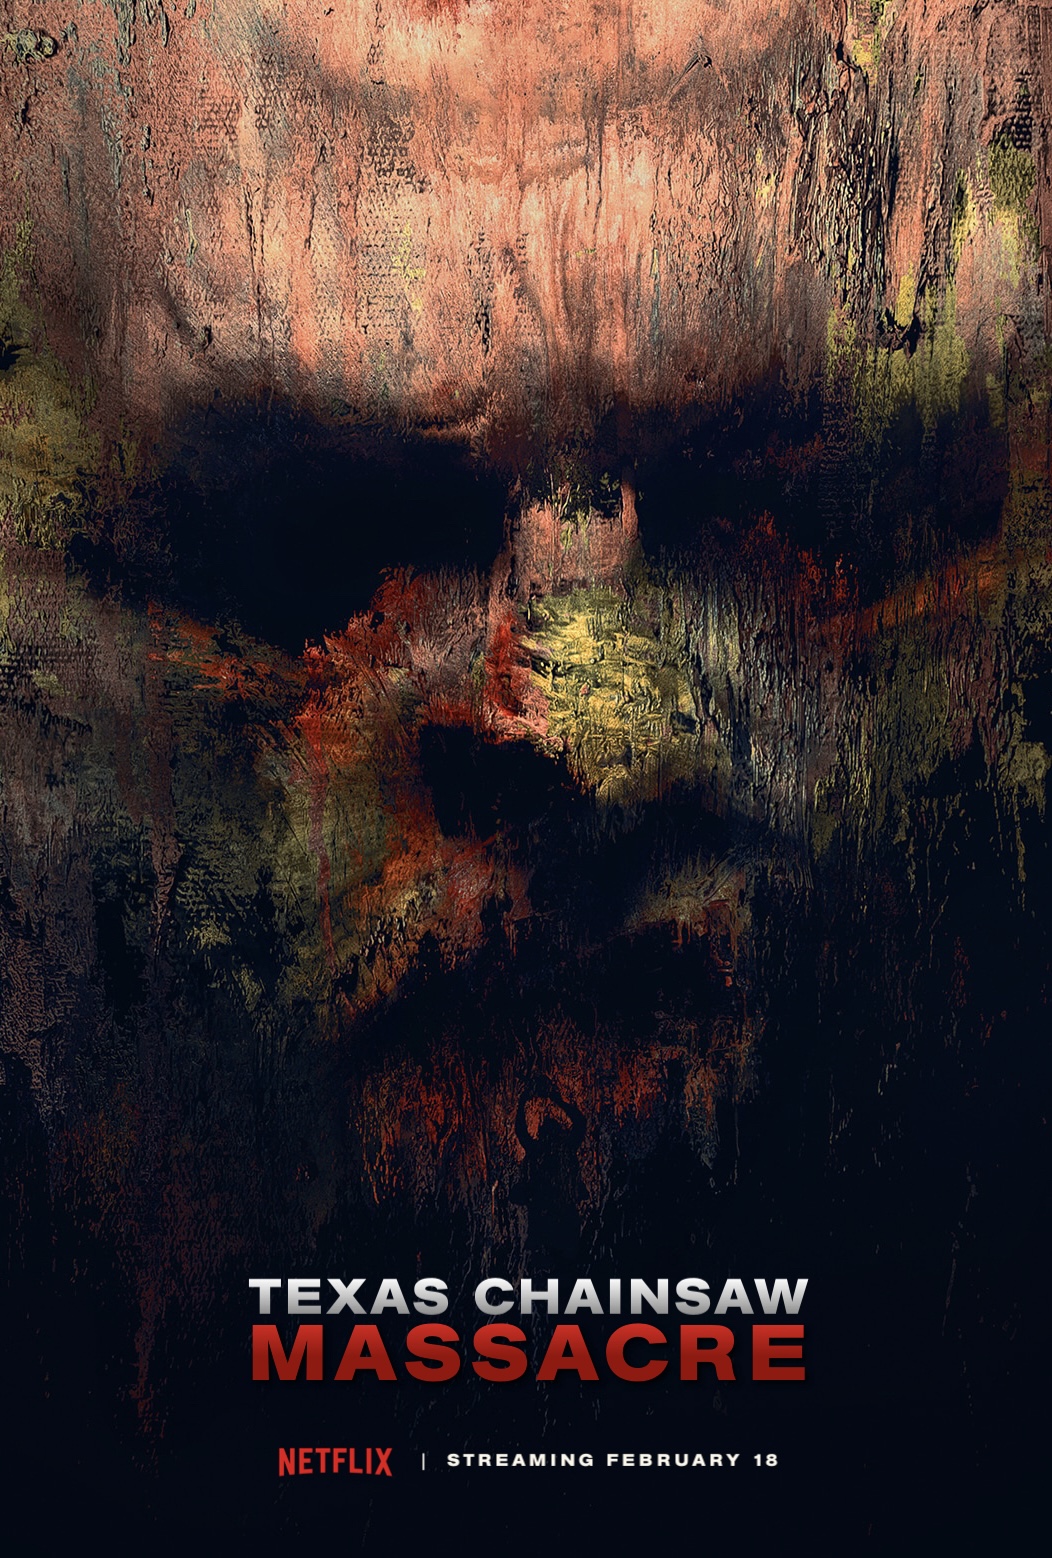 Is Texas Chainsaw Massacre on Netflix